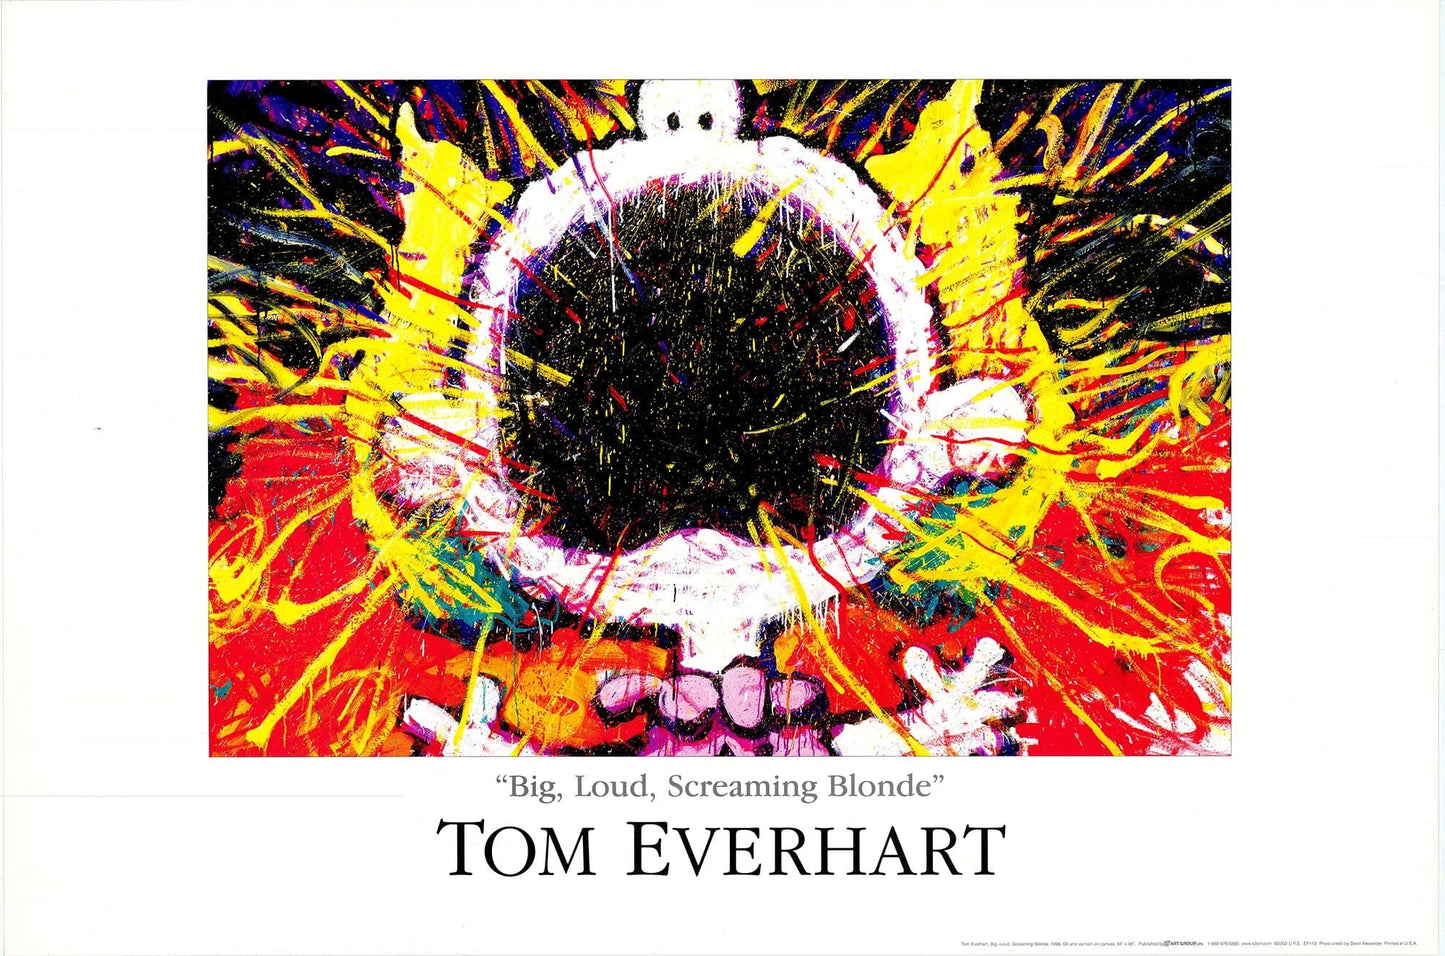 Tom Everhart  - Poster: "Big, Loud, Screaming Blonde"